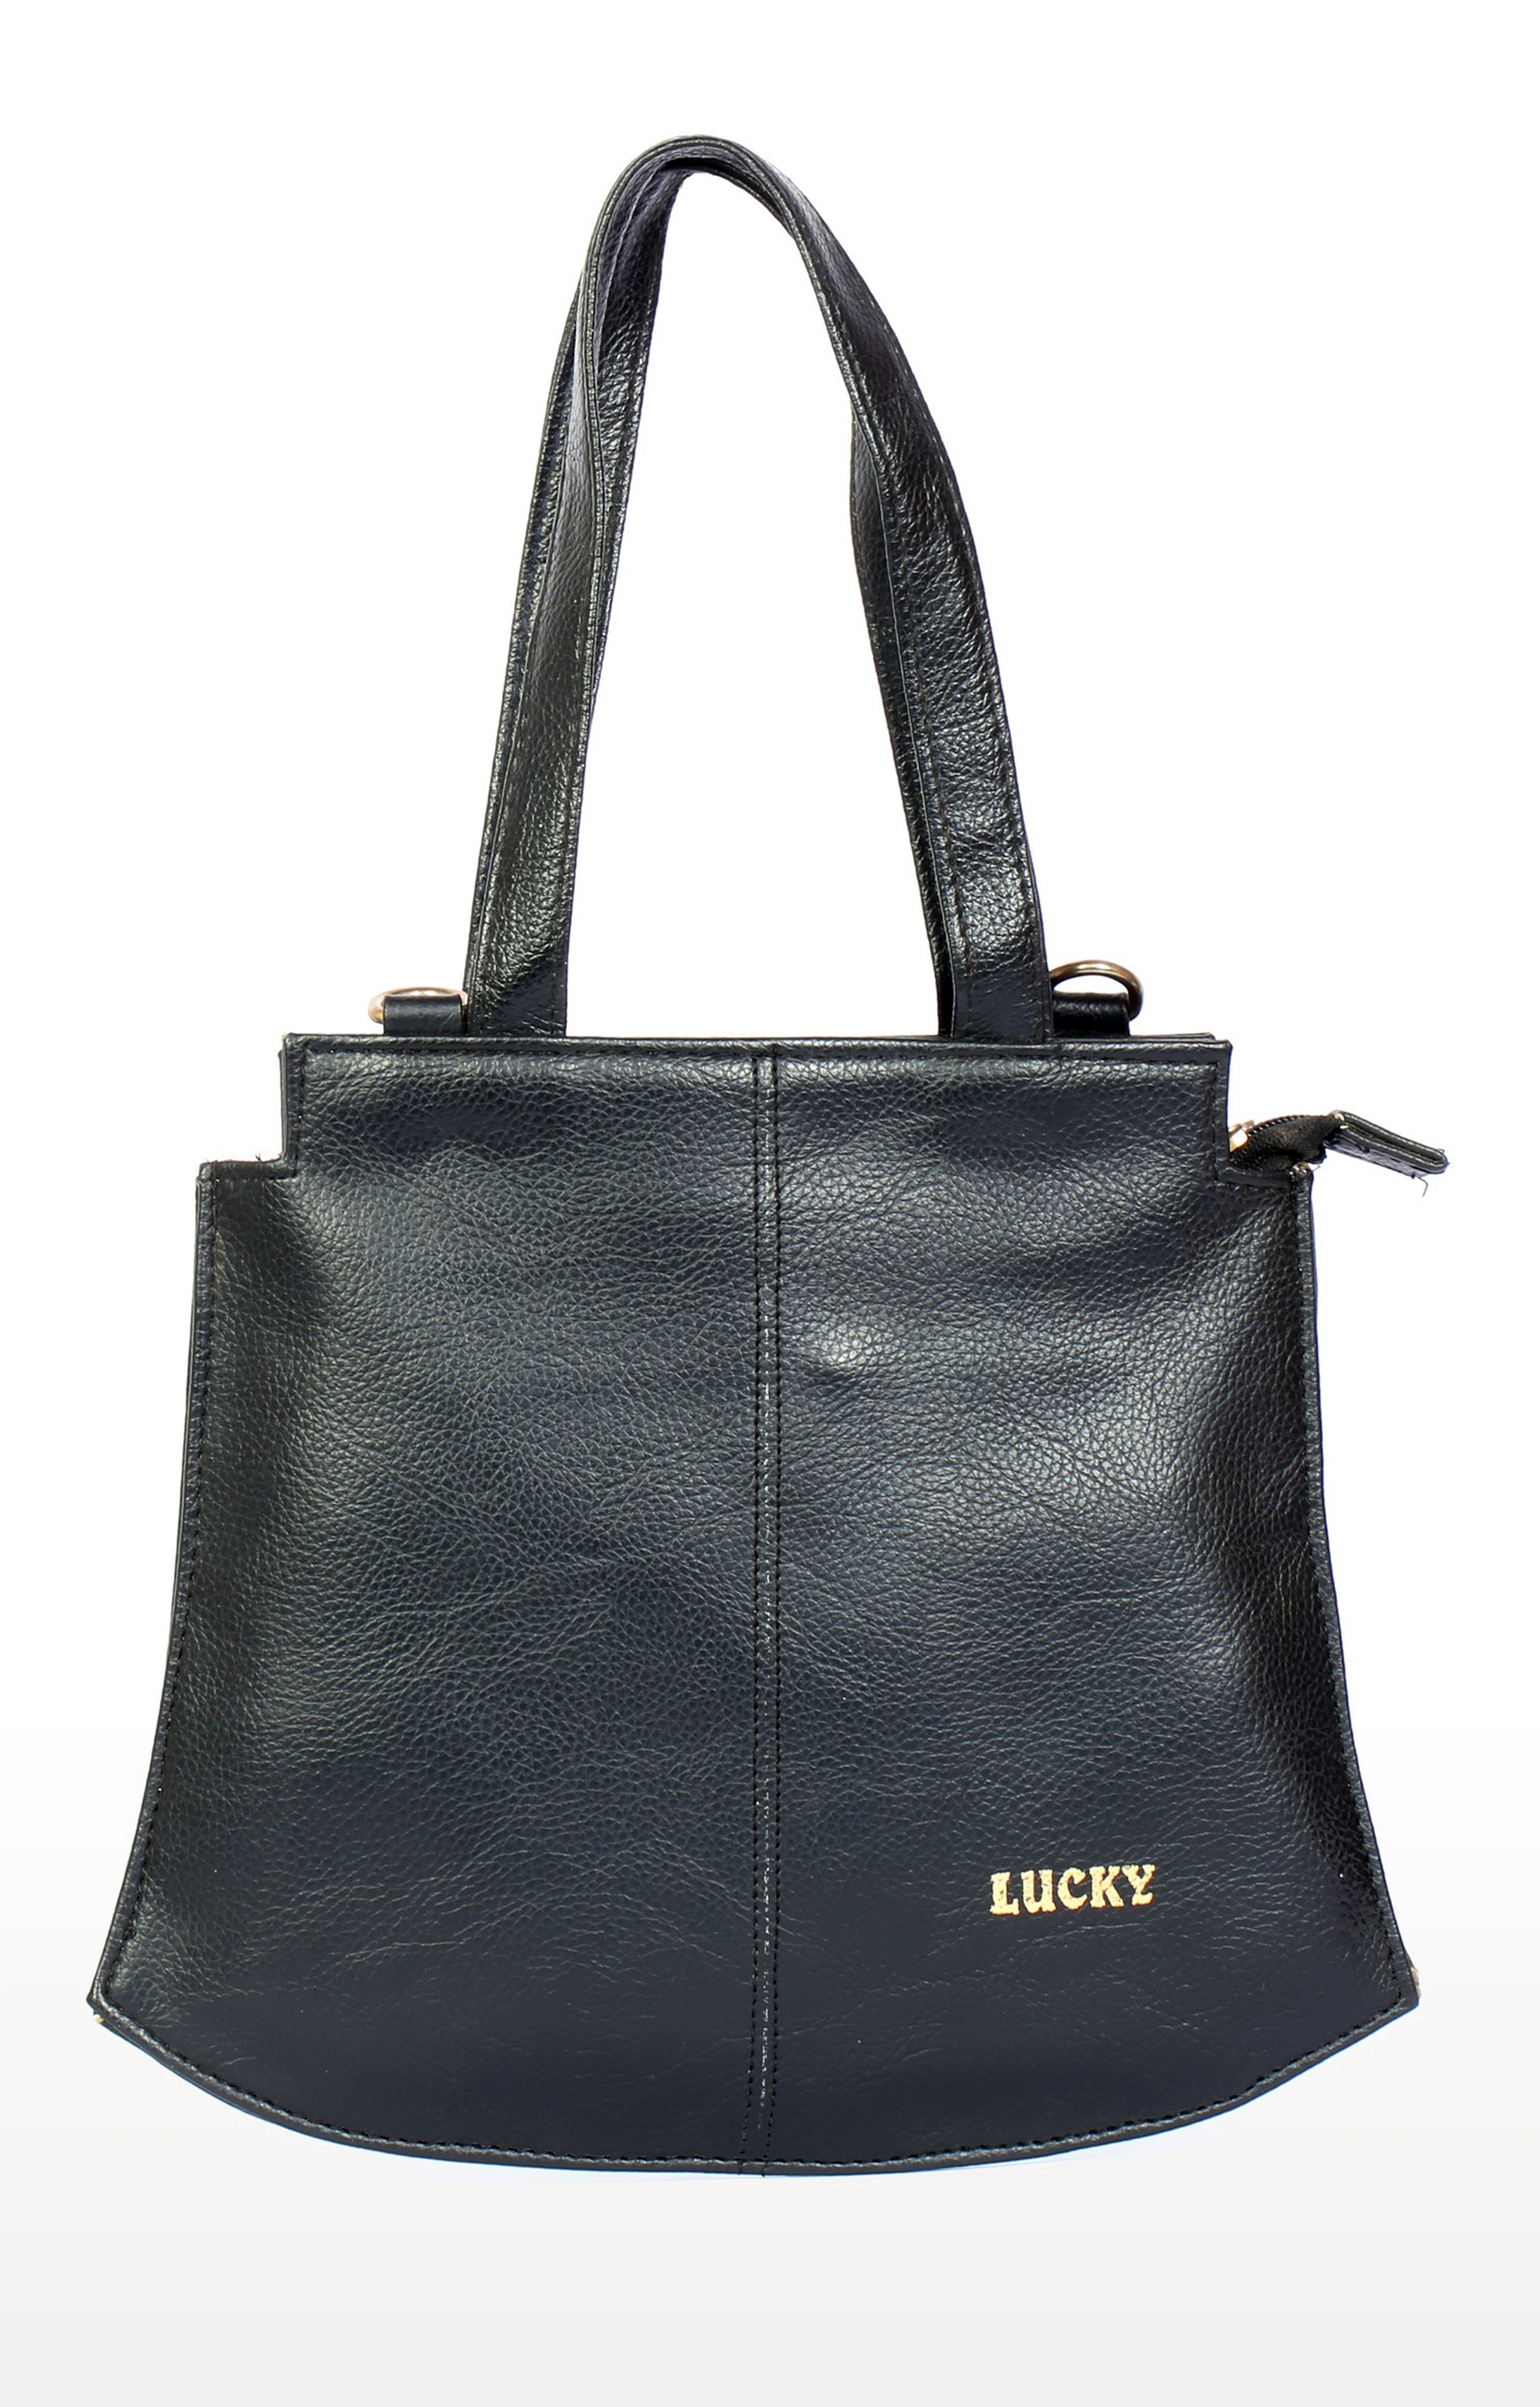 EMM | Lely's Fashionable Handbag With Adjustable Belt For Women 0